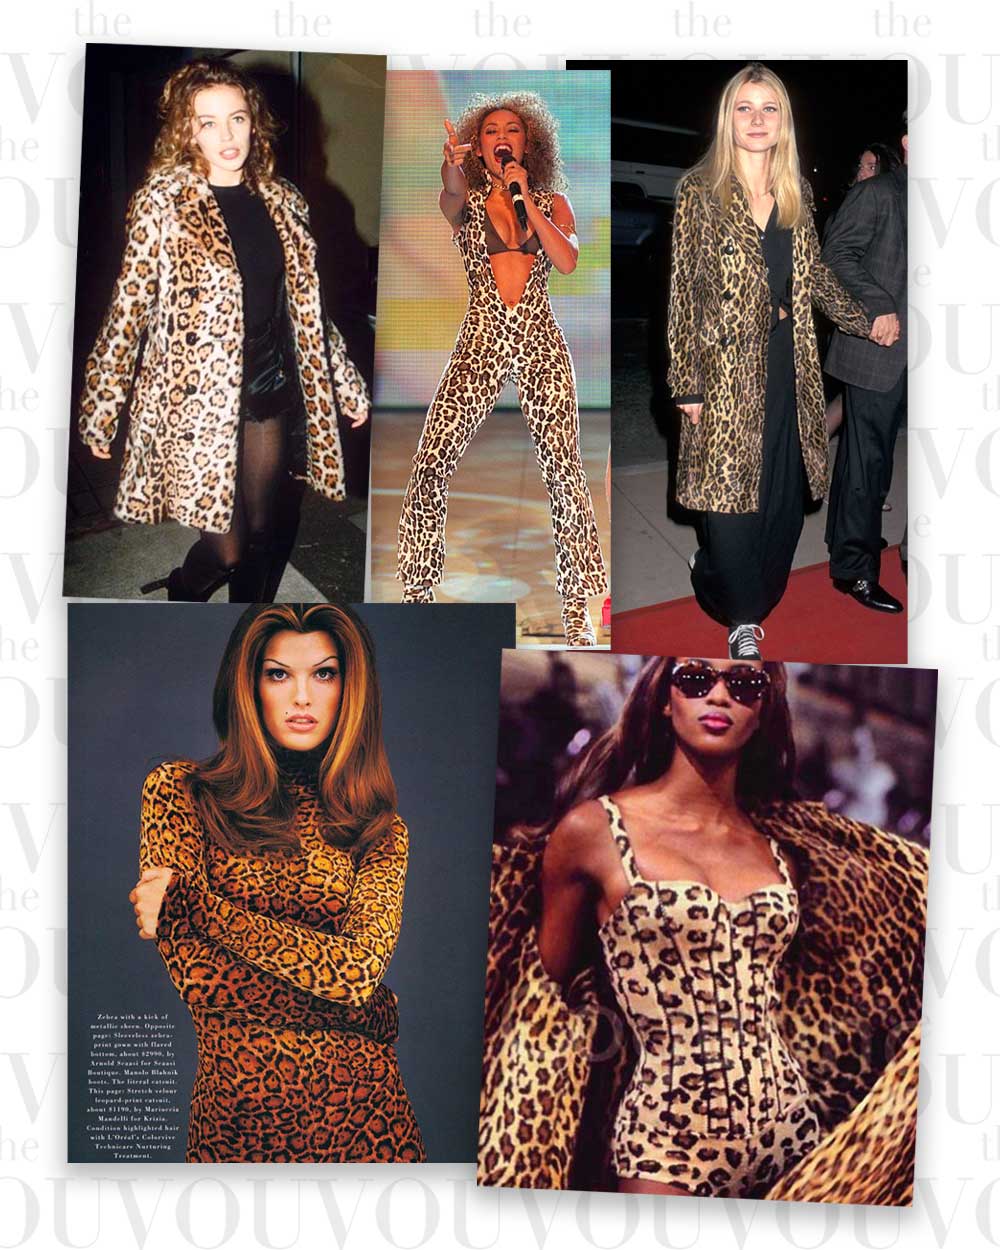 Animal Print fashion in 90s